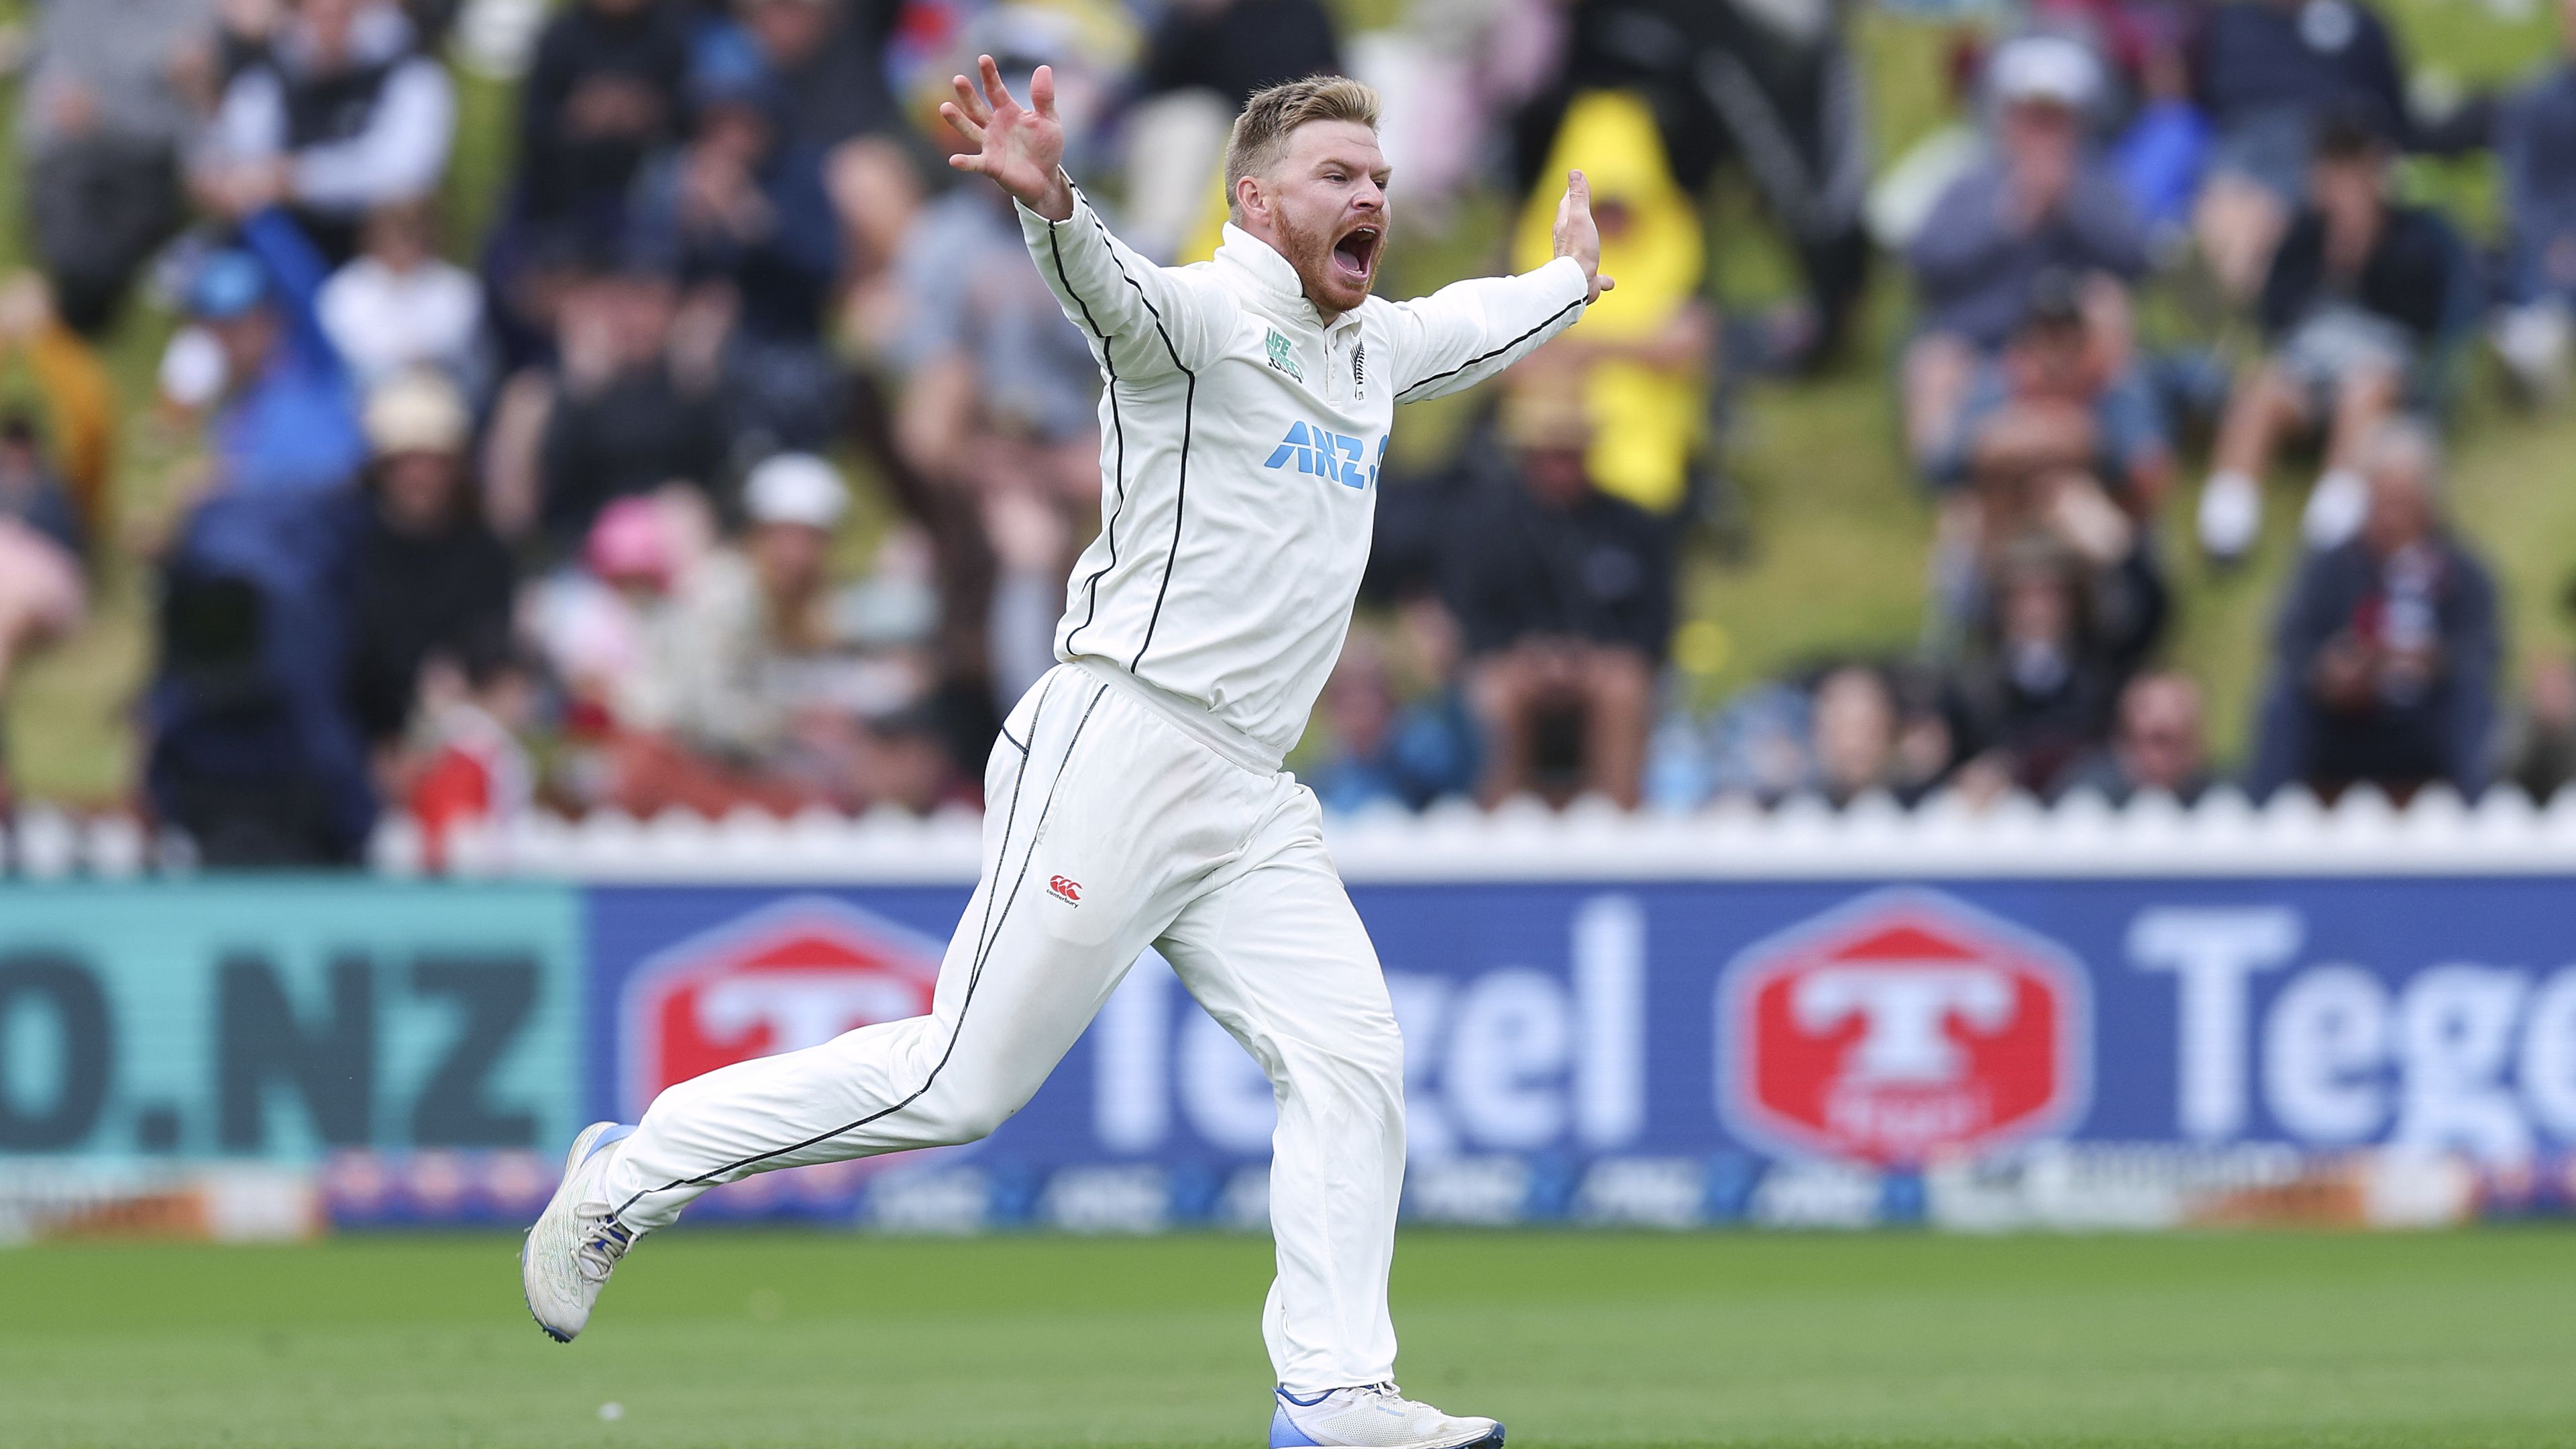 'Dream come true': New Zealand spinner Glenn Phillips stuns Australia with five-wicket haul